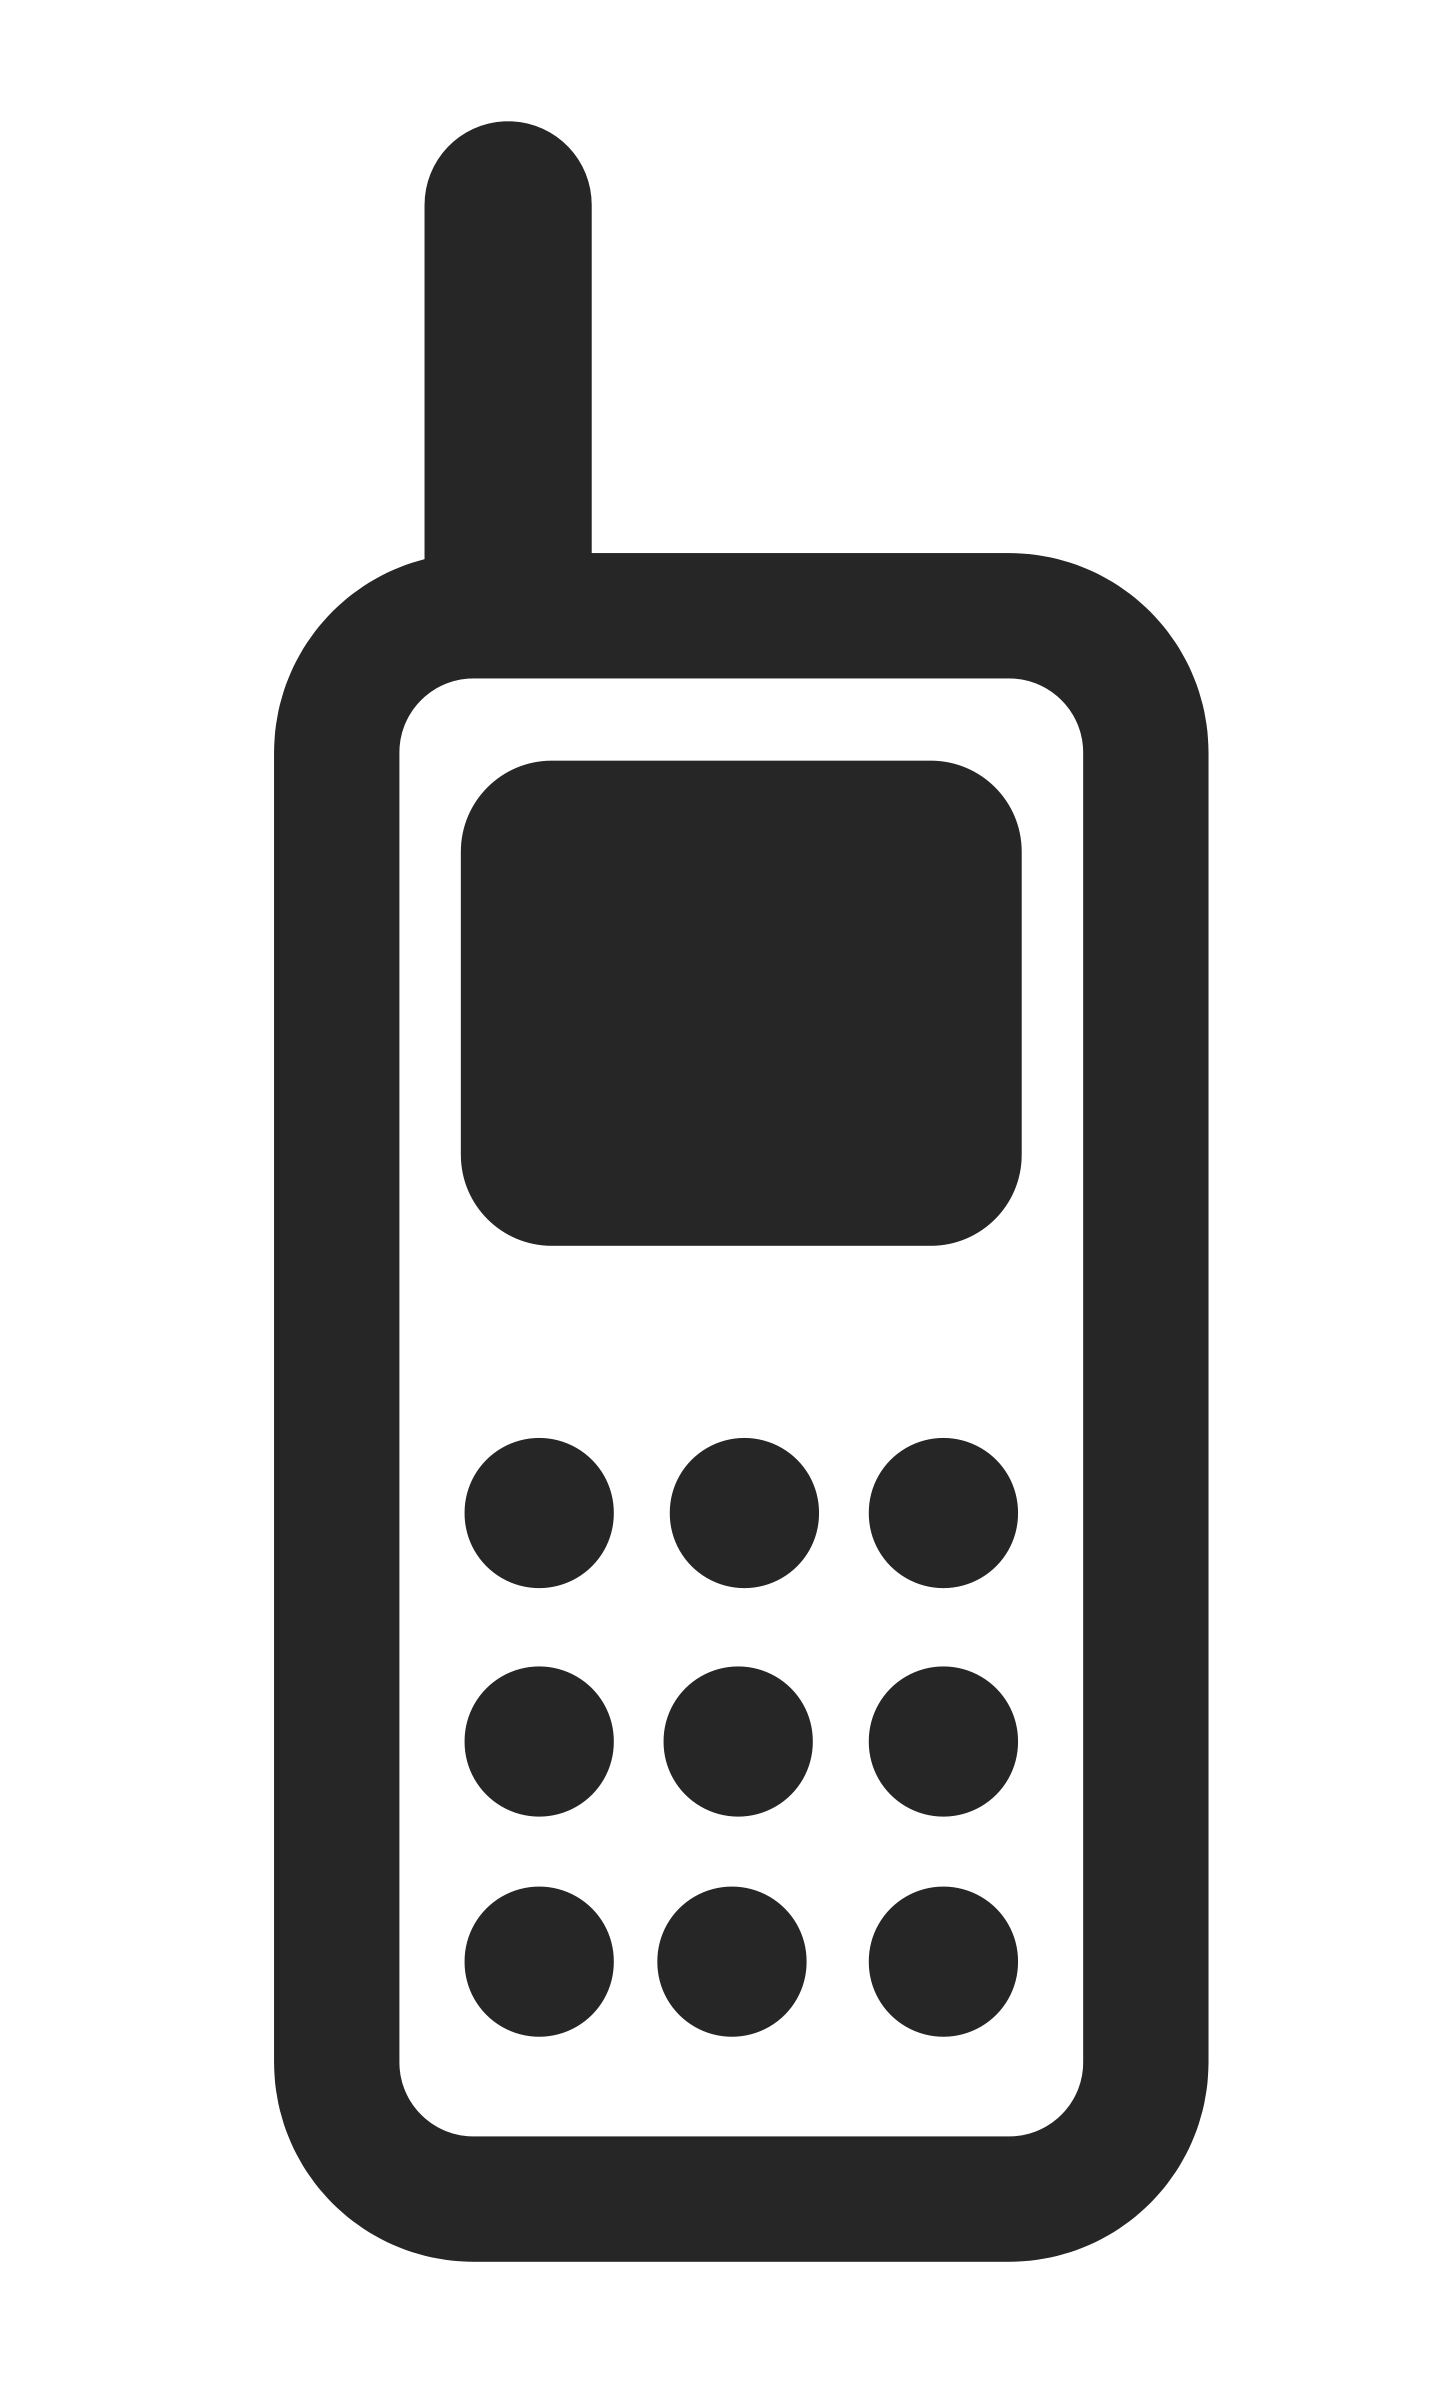 mobile telephone symbol